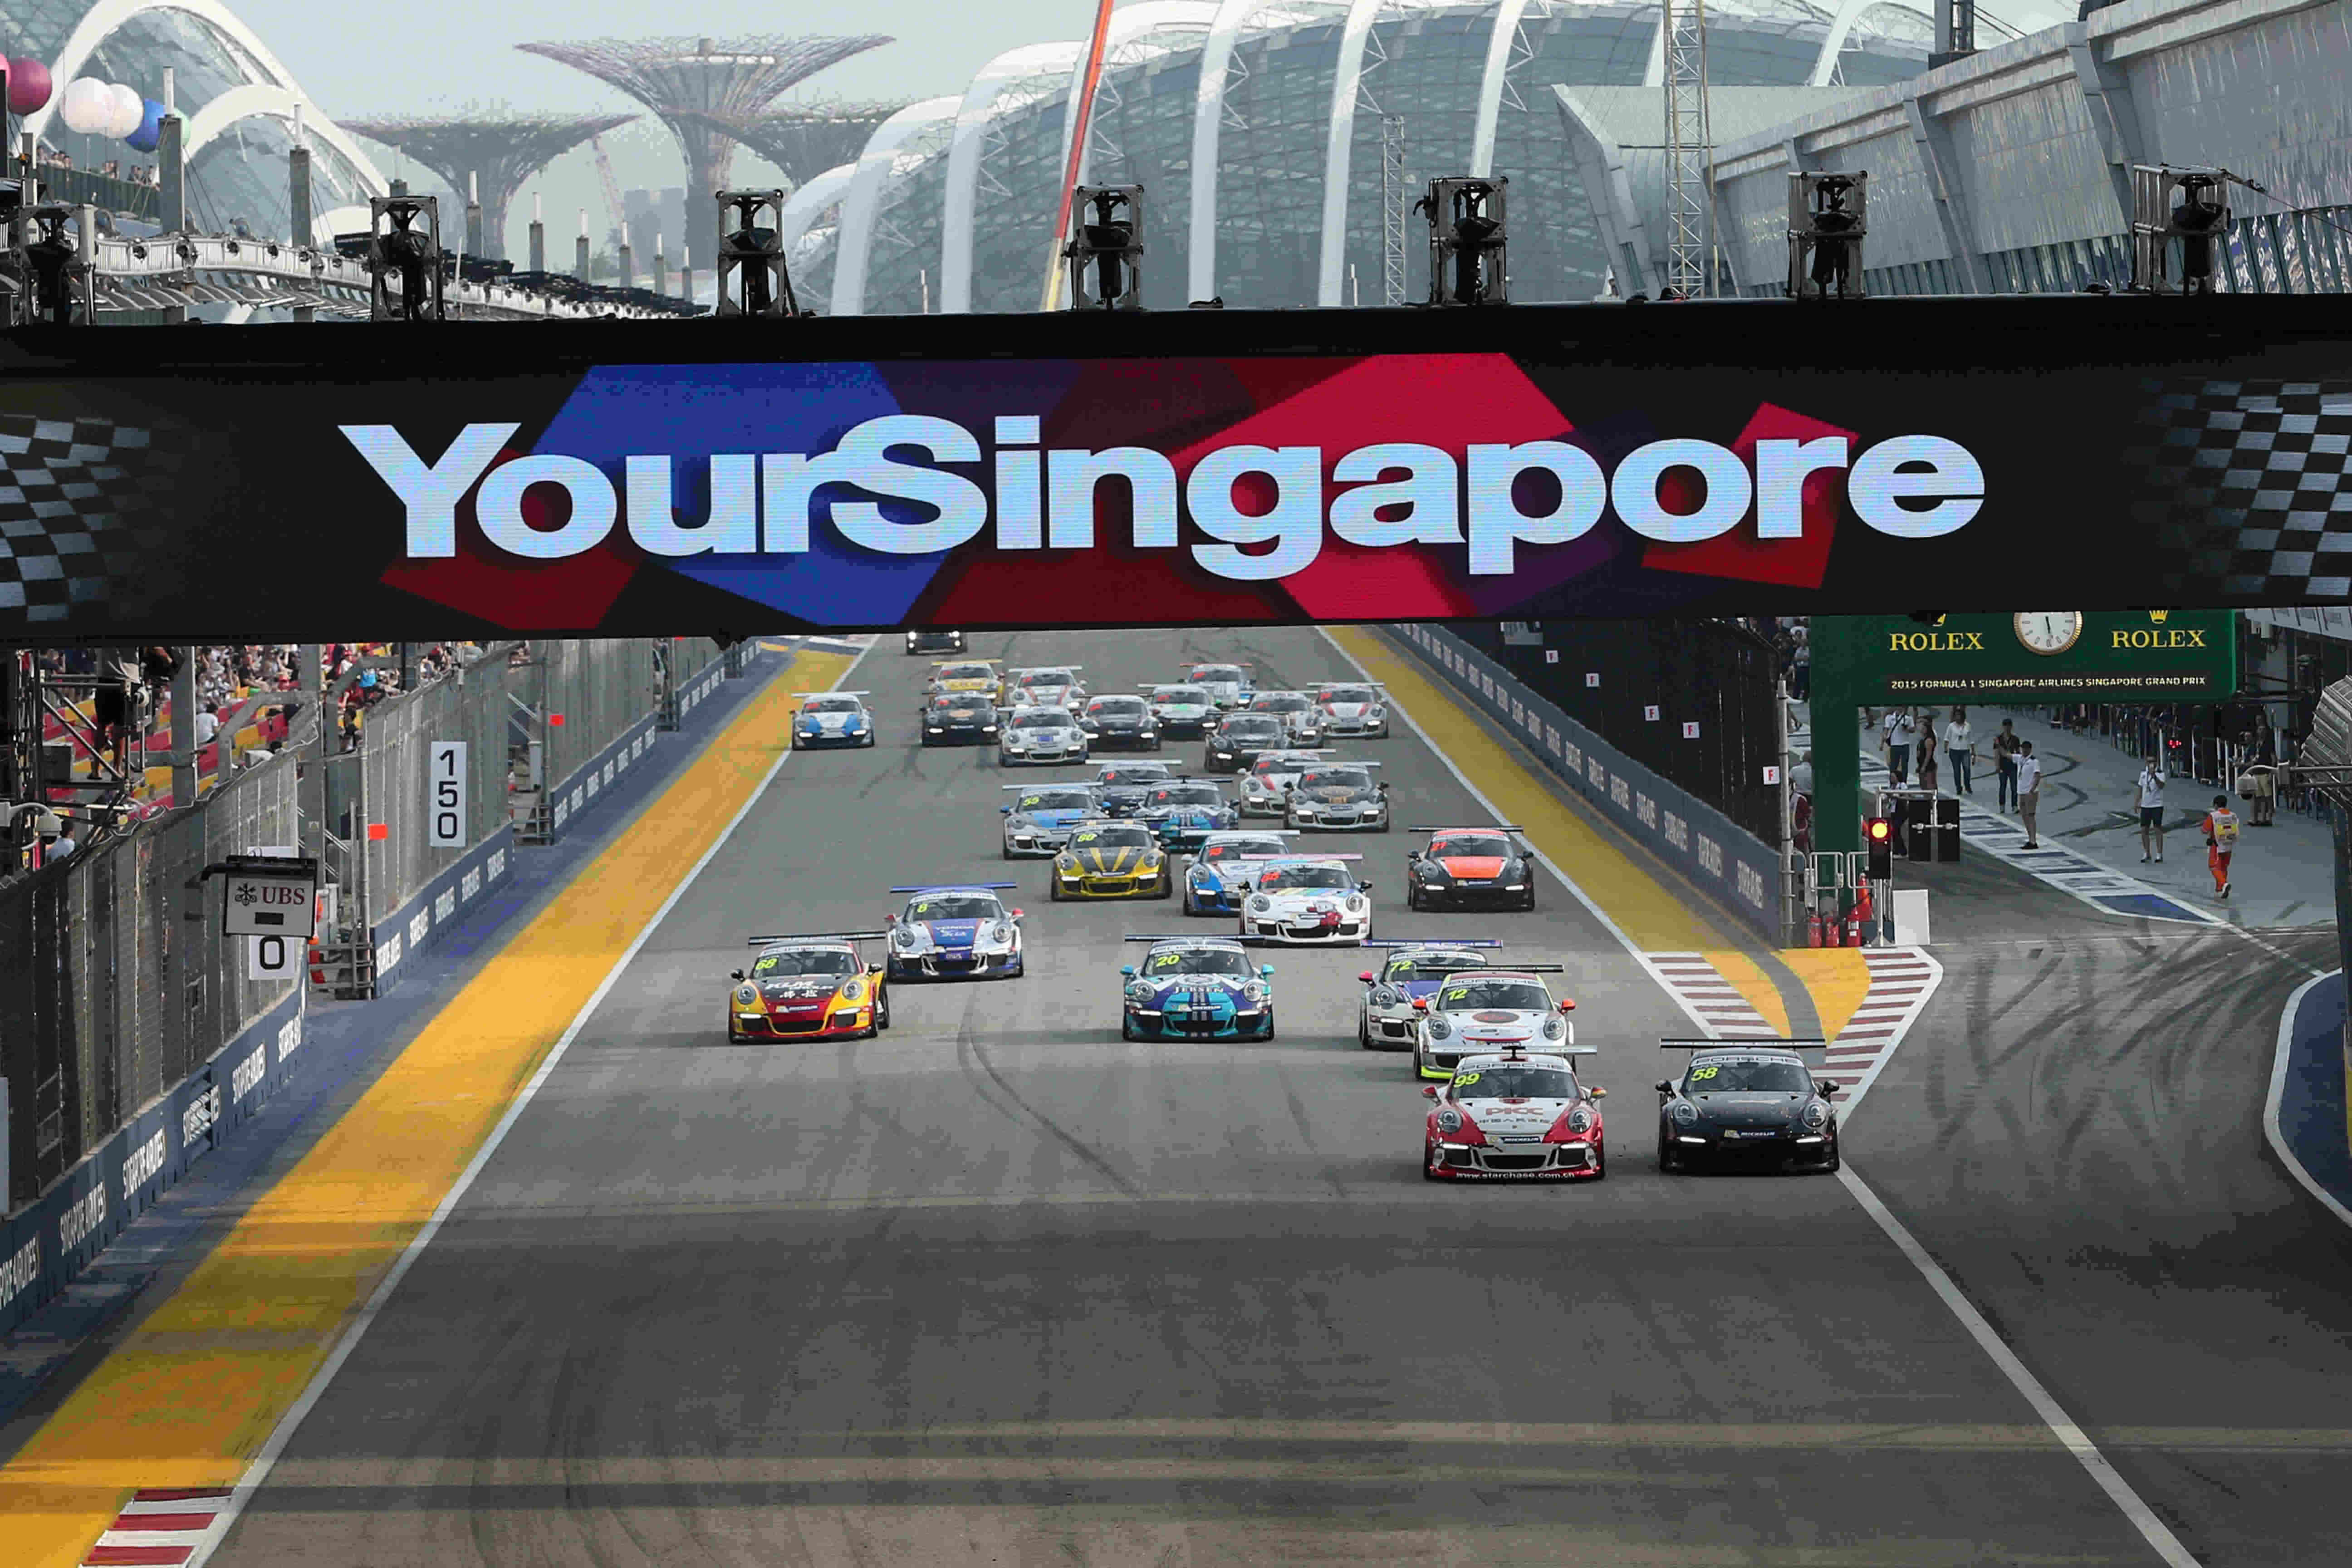 Baird and van der Drift 2-3 in Singapore, title showdown set for Shanghai